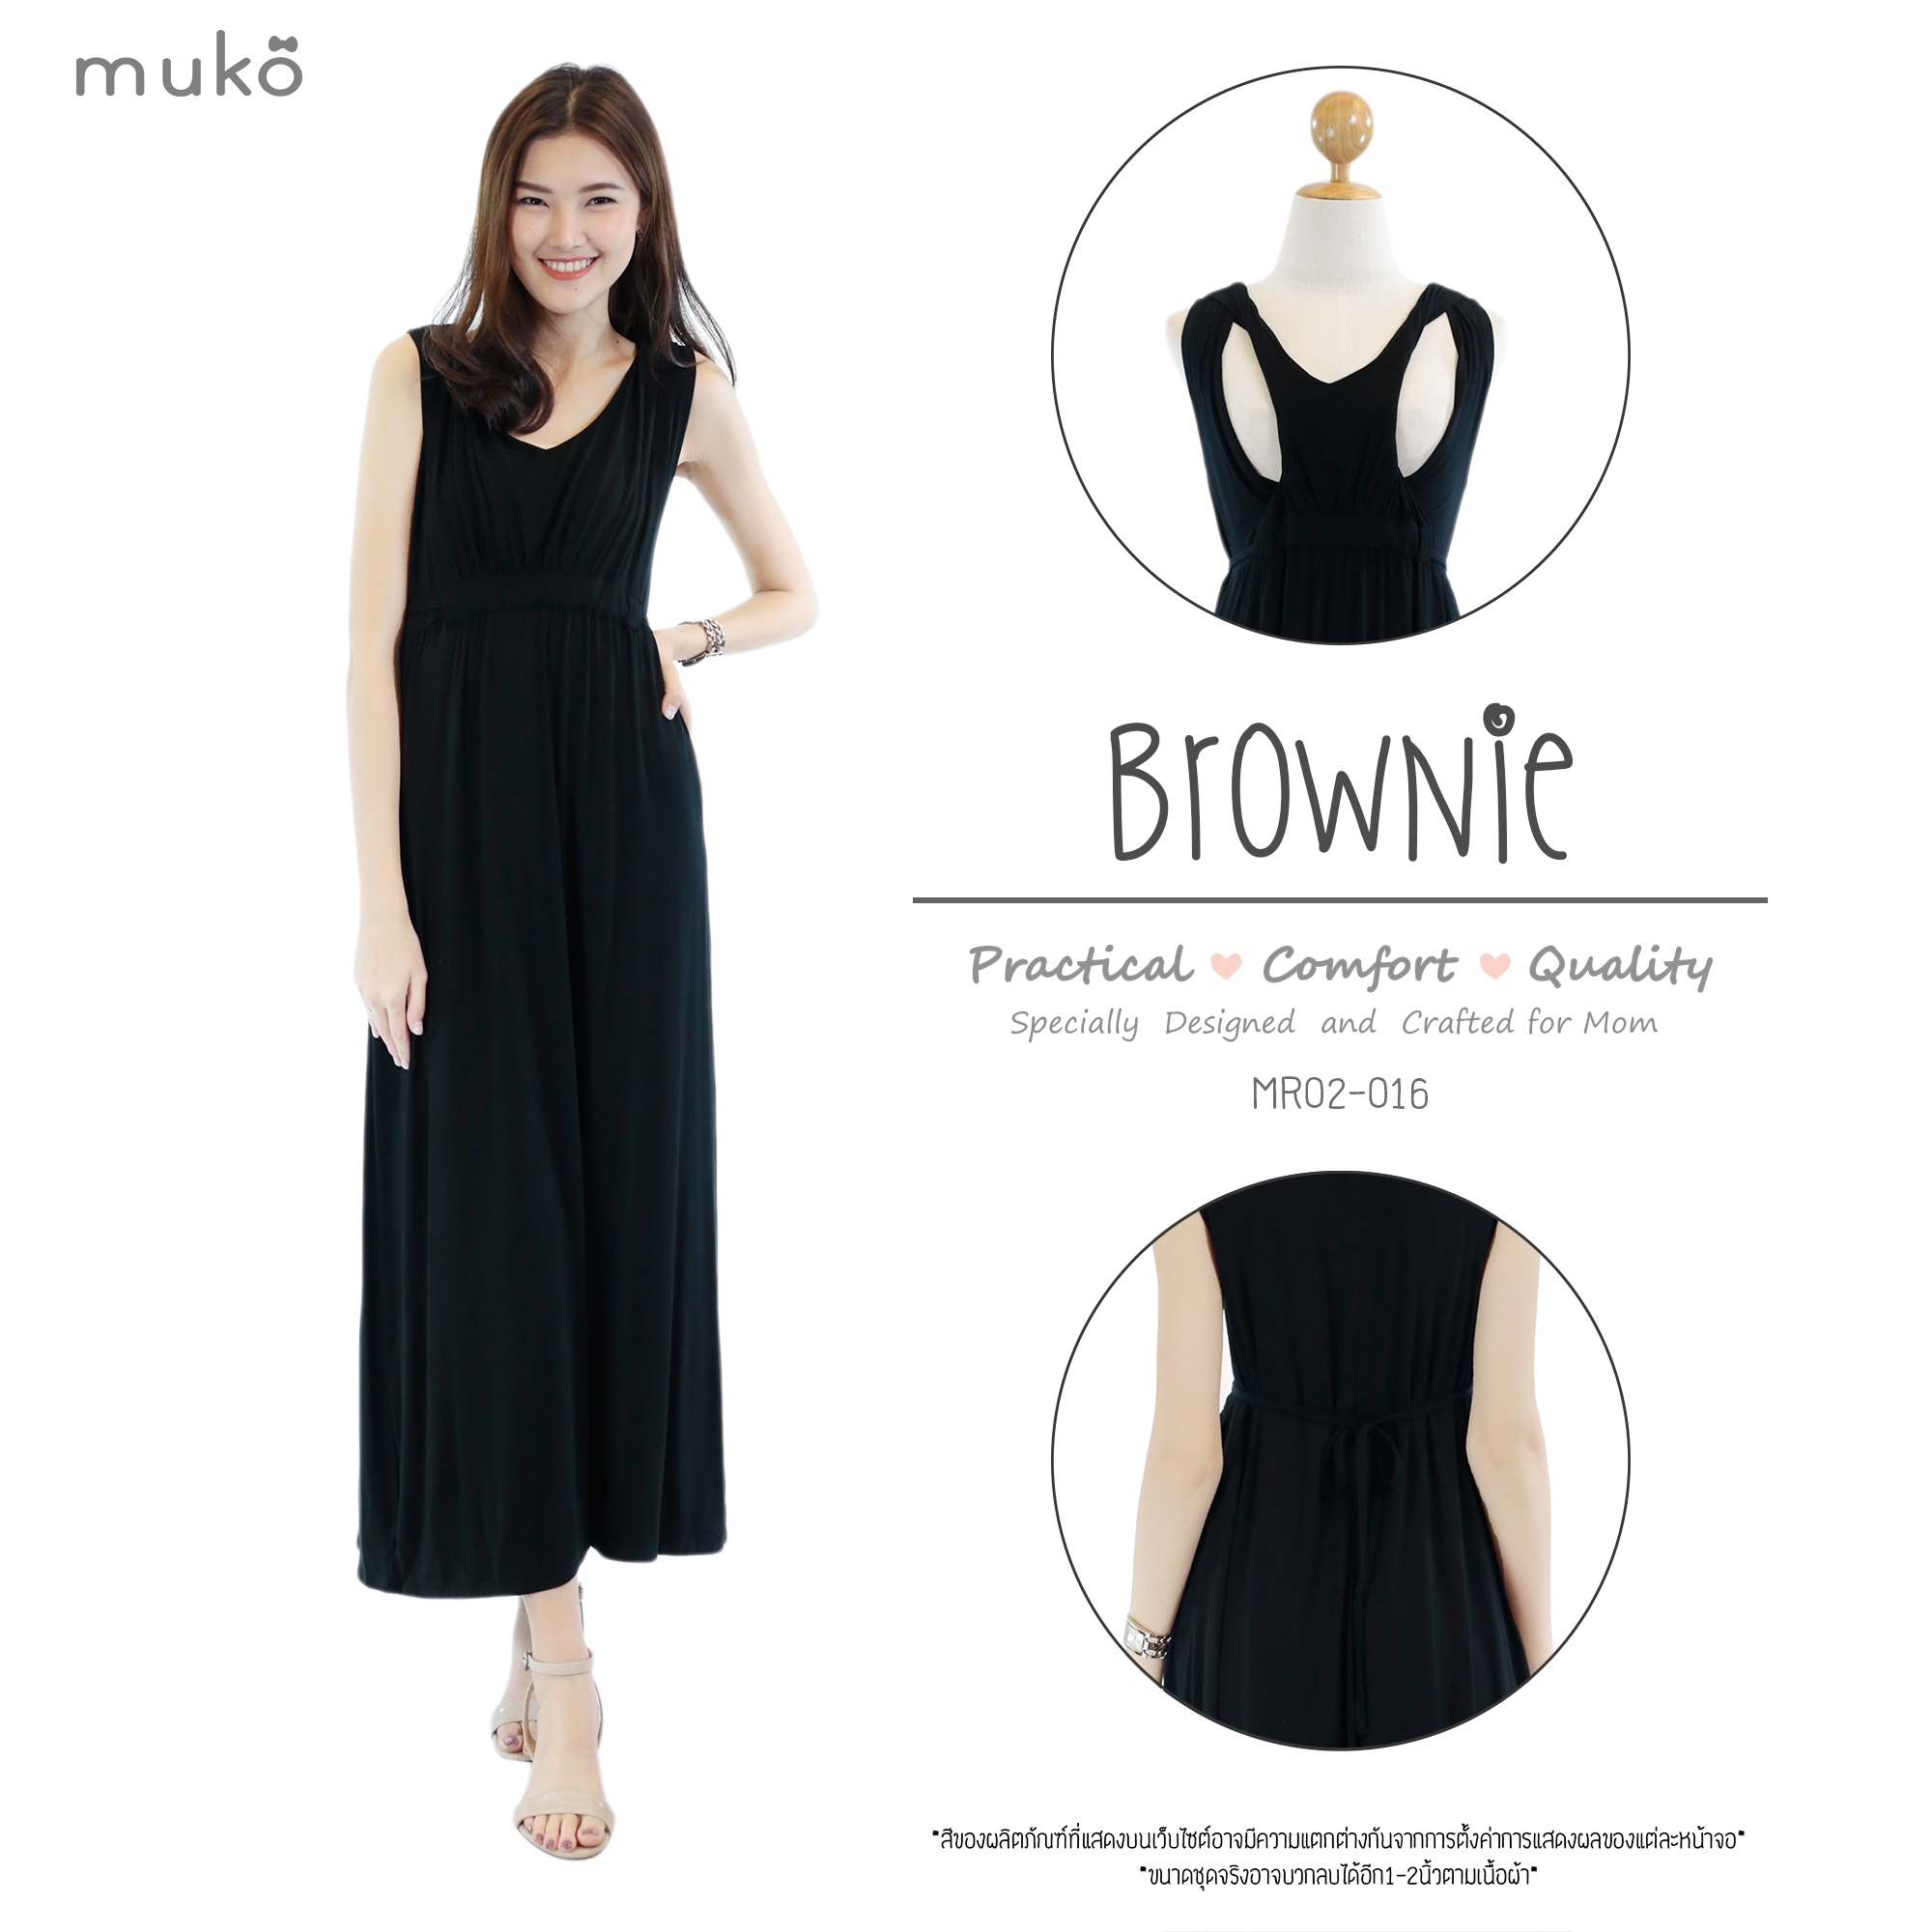 Muko Brownie 2 in 1 เสื้อให้นม คลุมท้อง  MR02-016 สีดำ